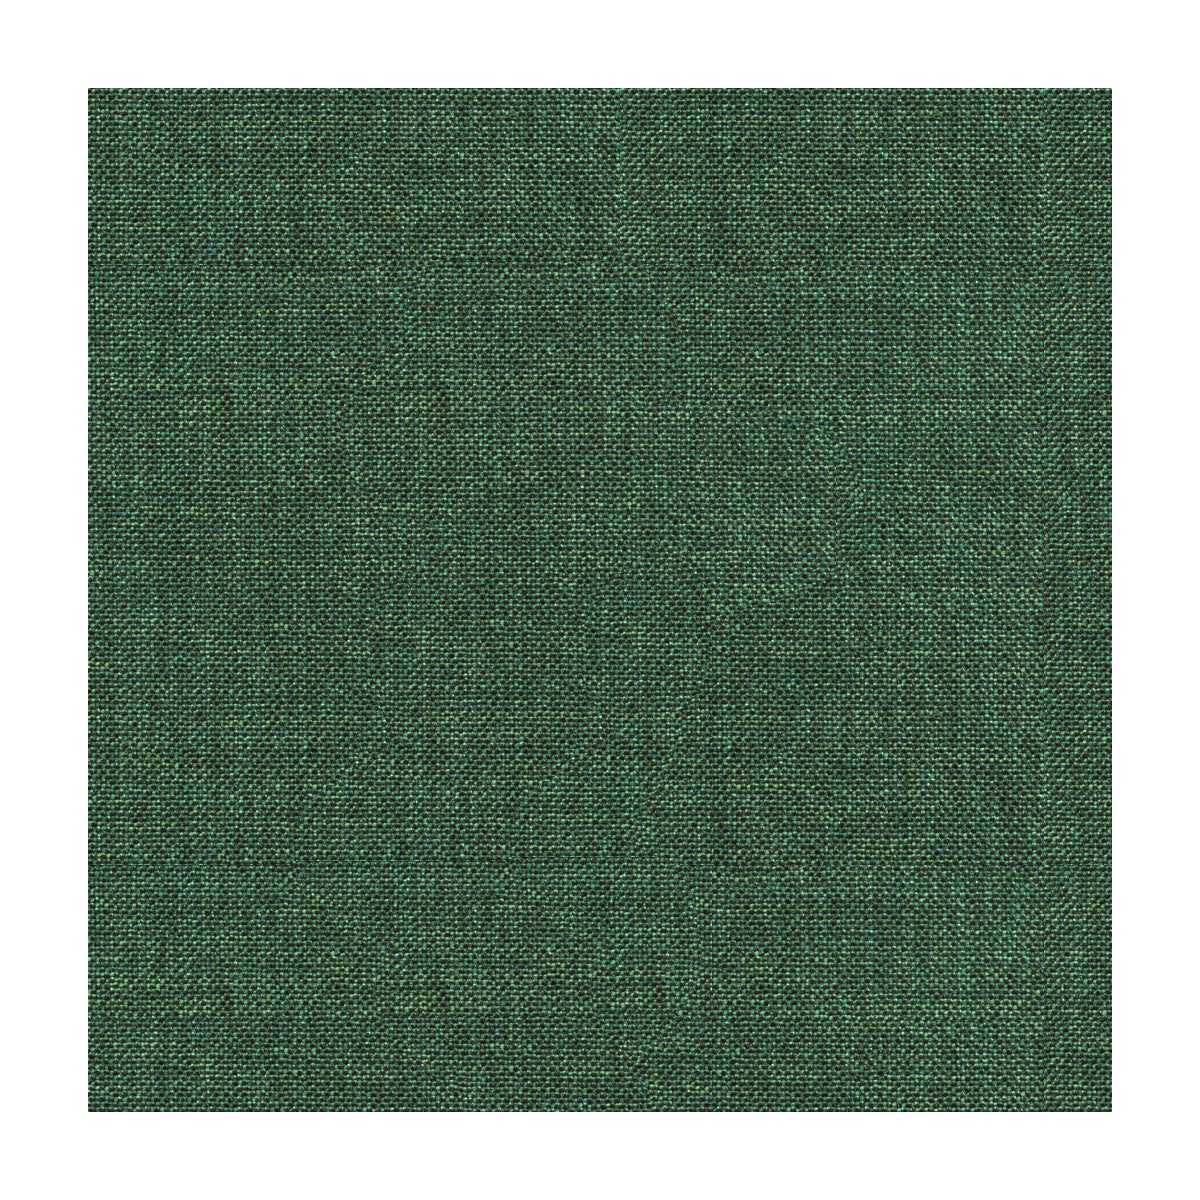 Kravet Smart fabric in 32959-3 color - pattern 32959.3.0 - by Kravet Smart